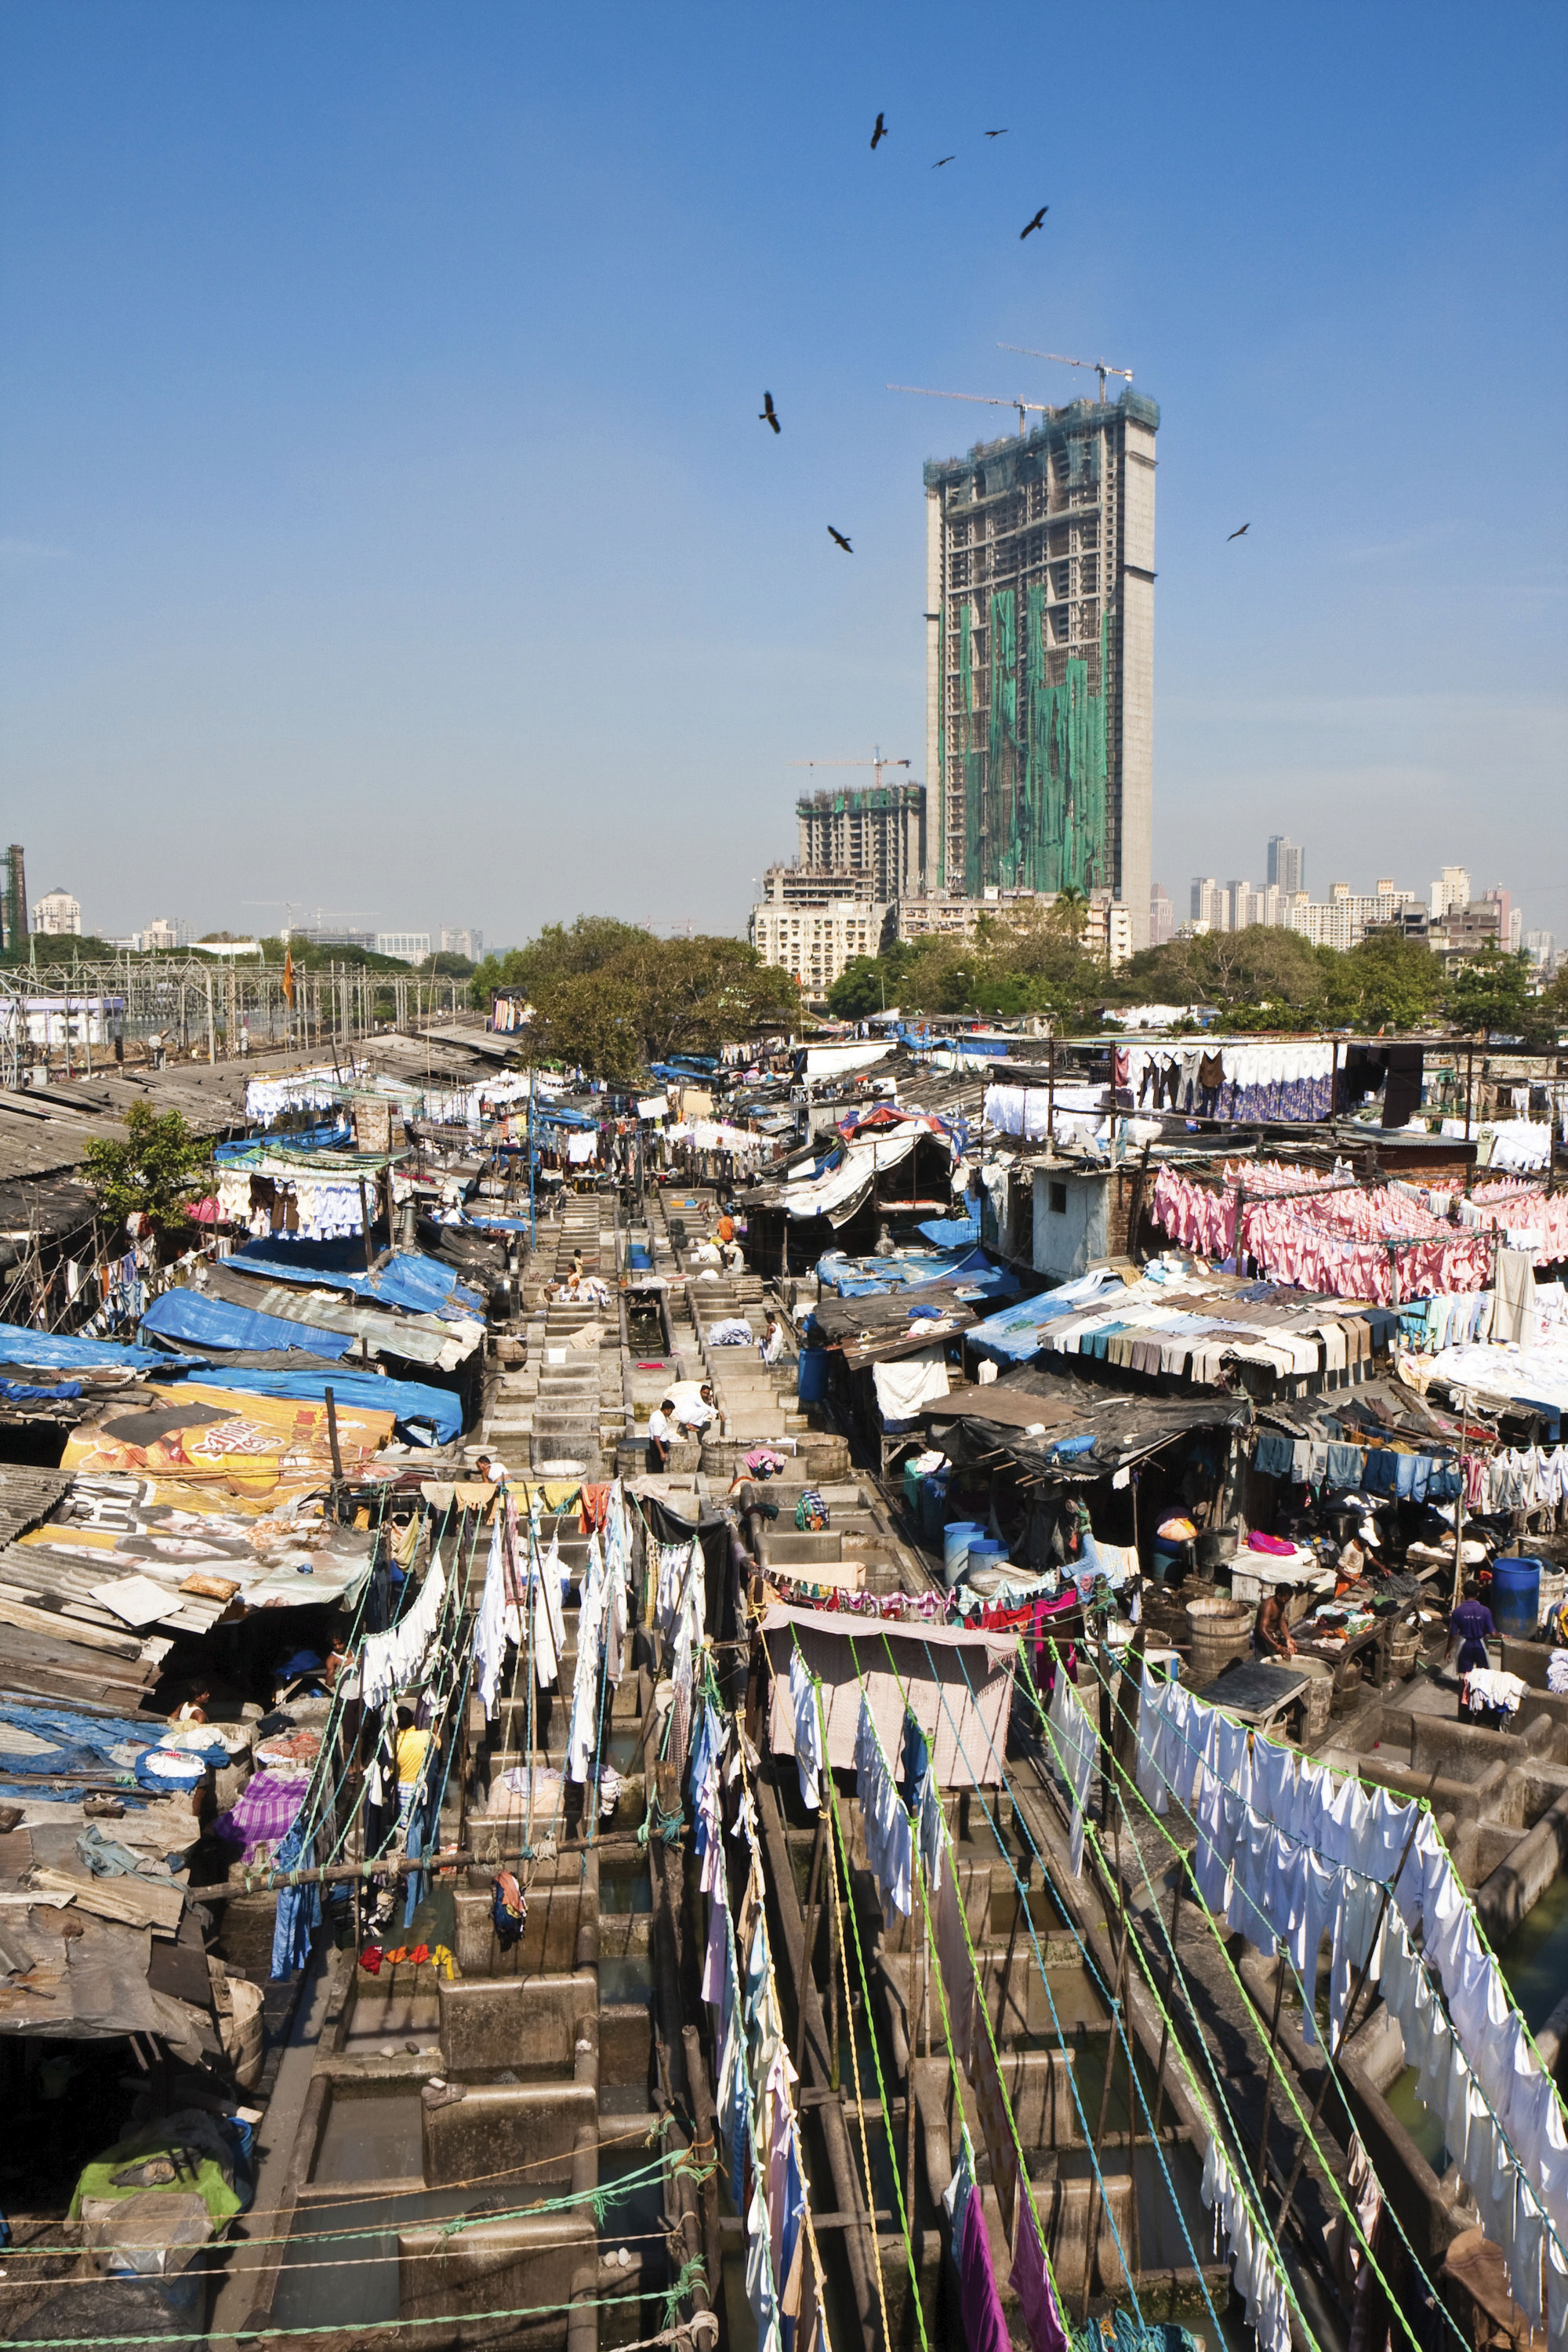 Advantages and disadvantages of urbanisation essay